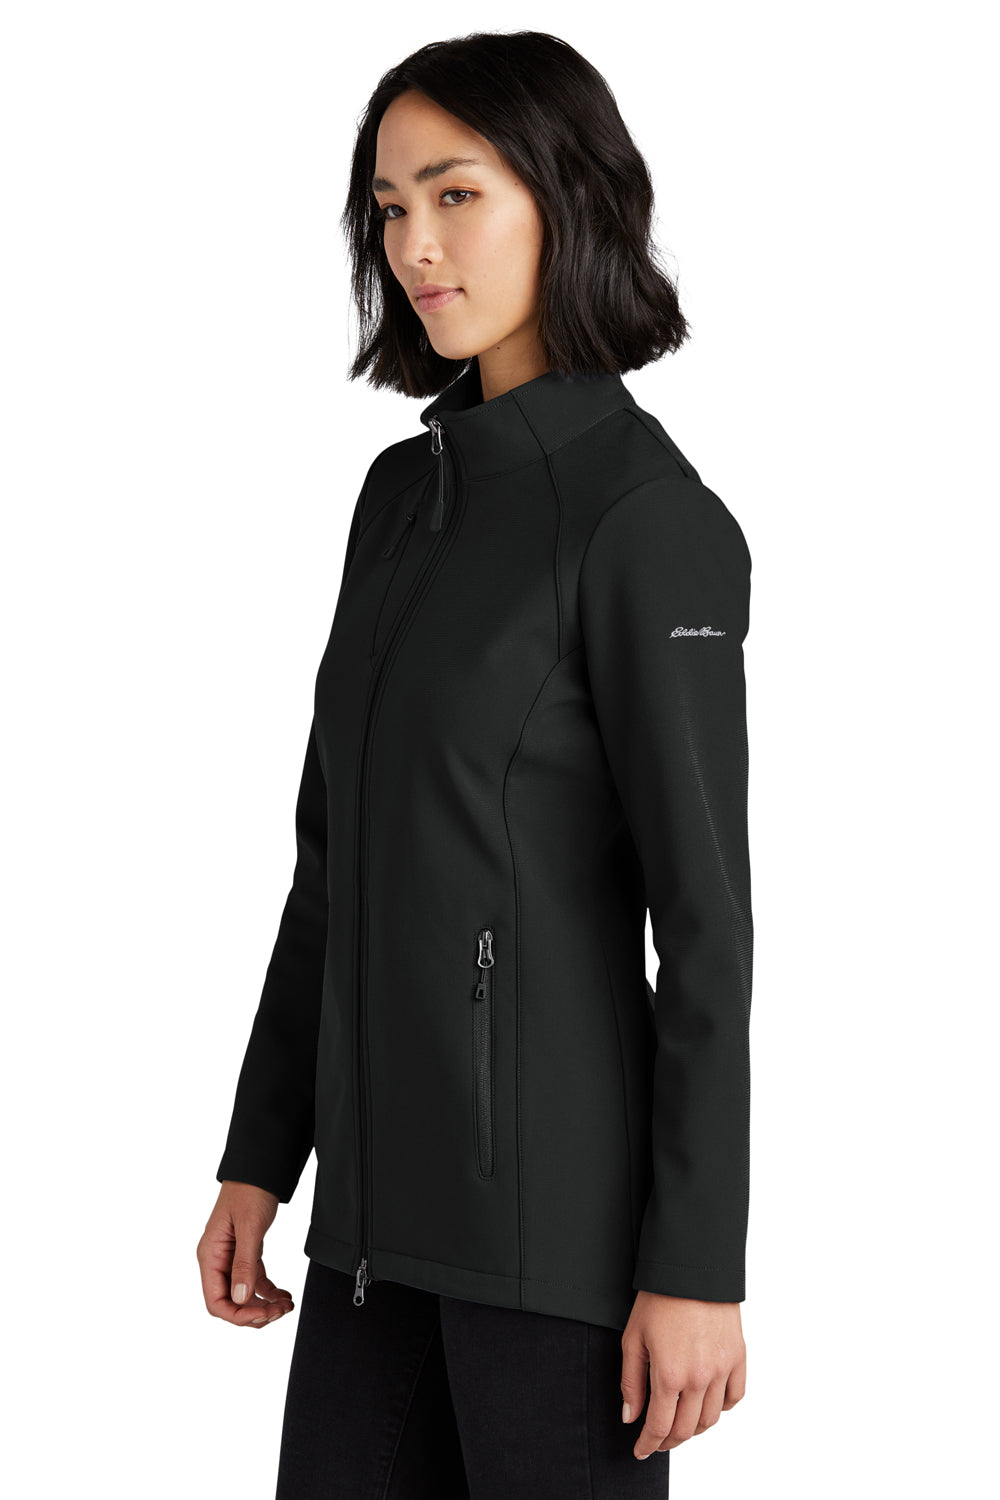 Eddie Bauer EB545 Womens Stretch Water Resistant Full Zip Soft Shell Jacket Deep Black Model Side